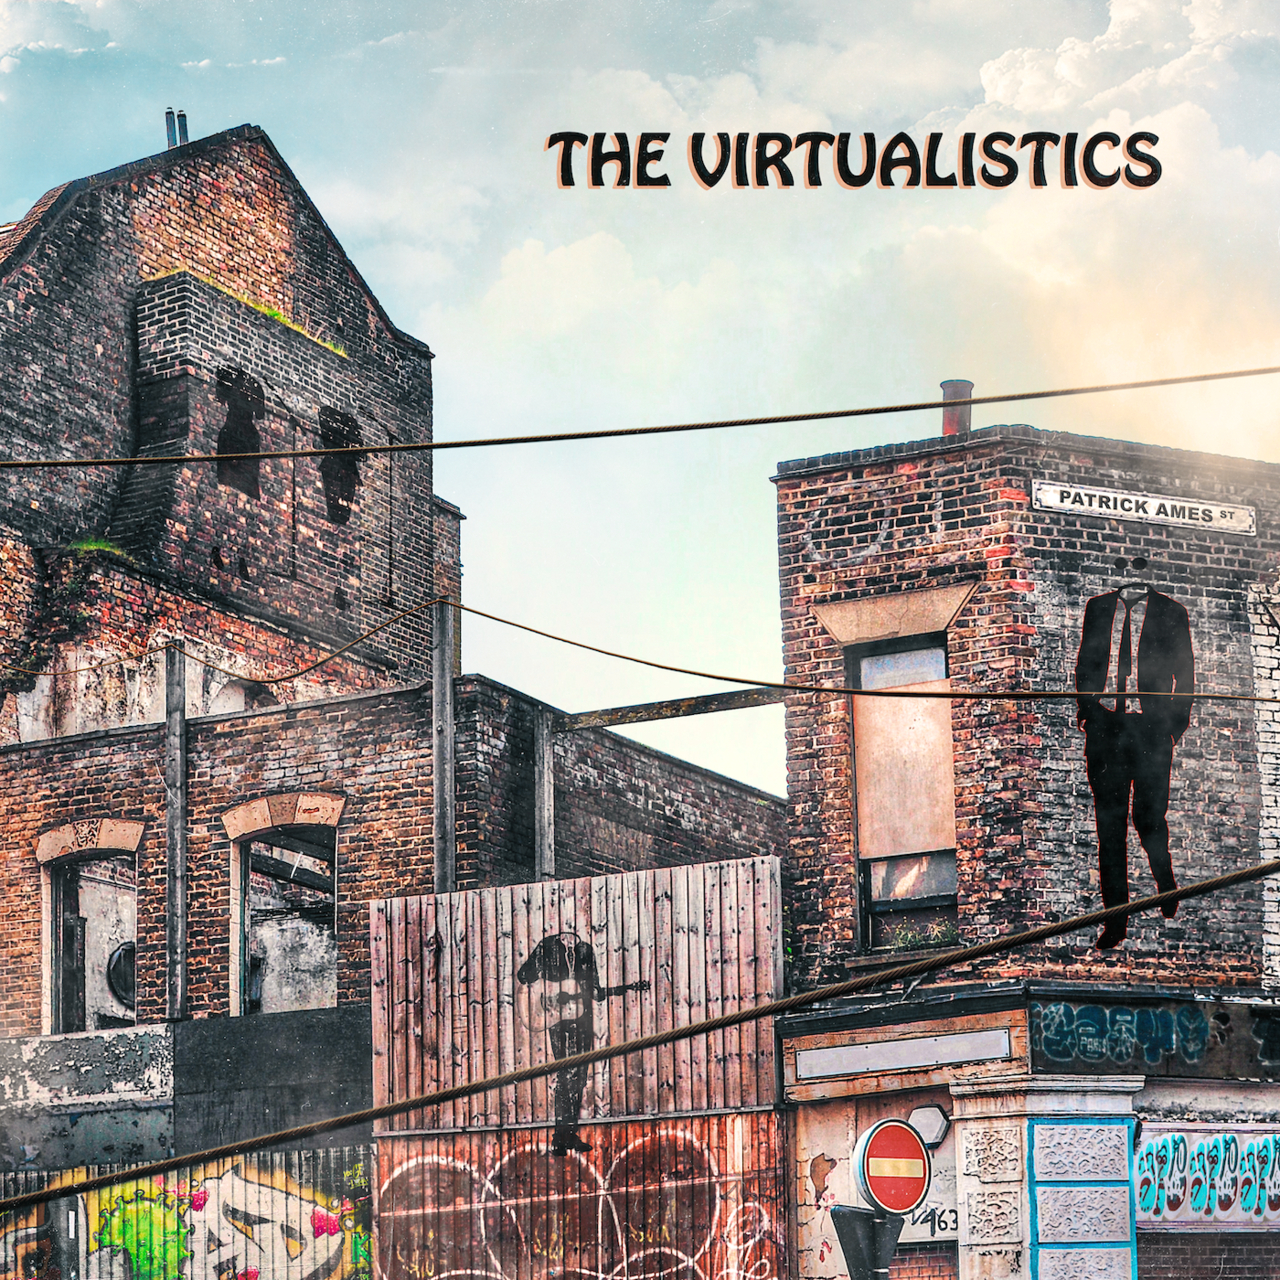 The Virtualistics